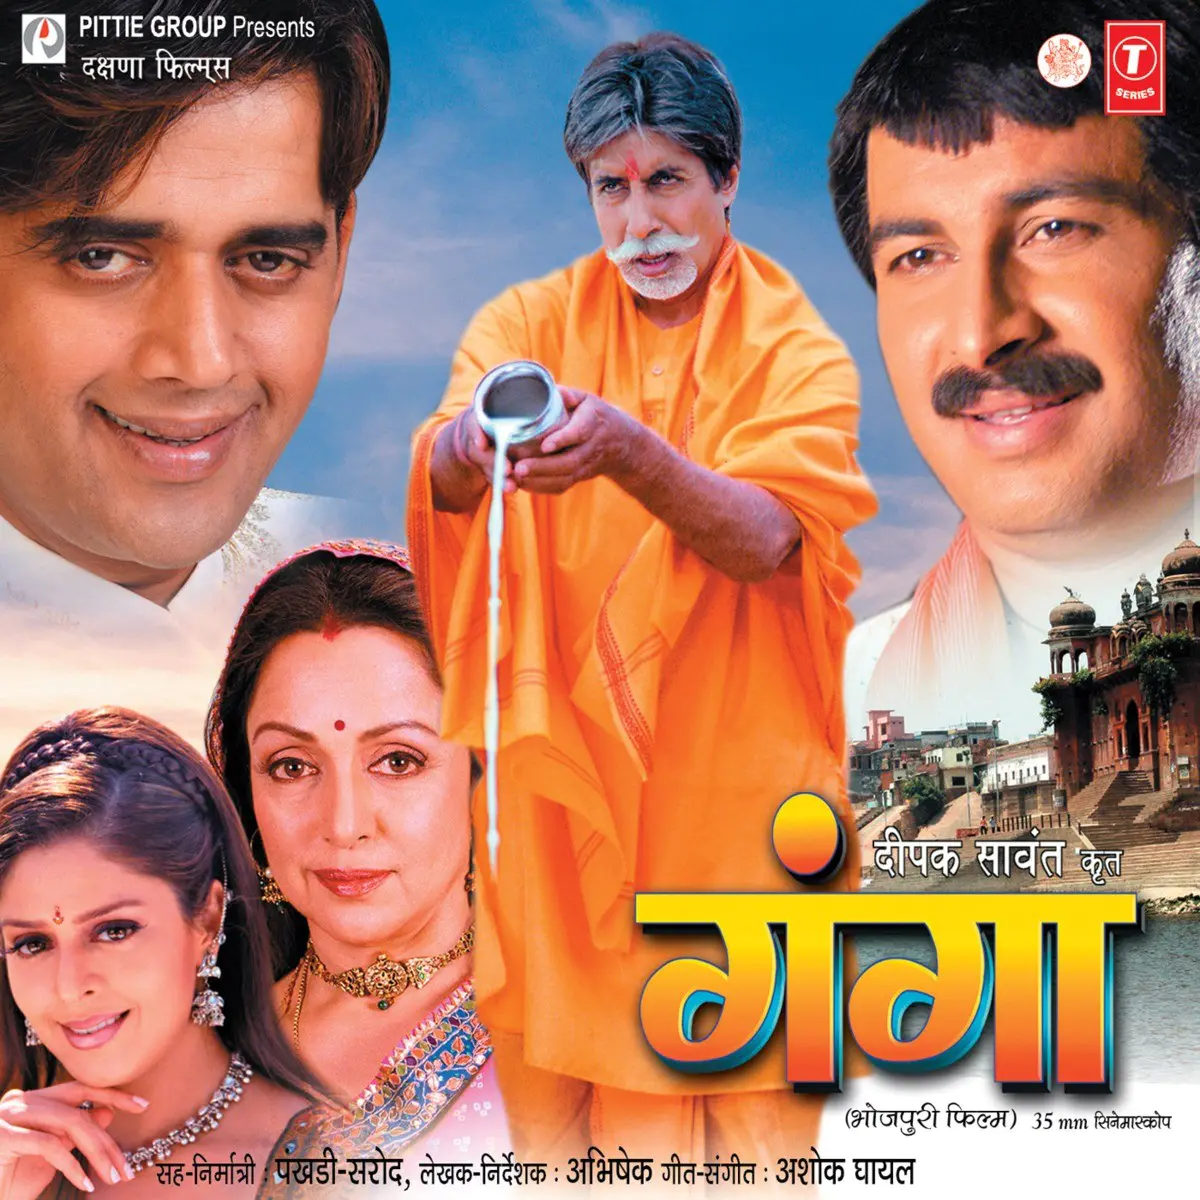 Poster of Ganga, a 2006 Bhojpuri film starring Amitabh Bachchan as Thakur Vijay Singh, Hema Malini as Thakurain Savitri V. Singh, Nagma as Ganga, Ravi Kishan as Shankar, and Manoj Tiwari as Bajrangi.